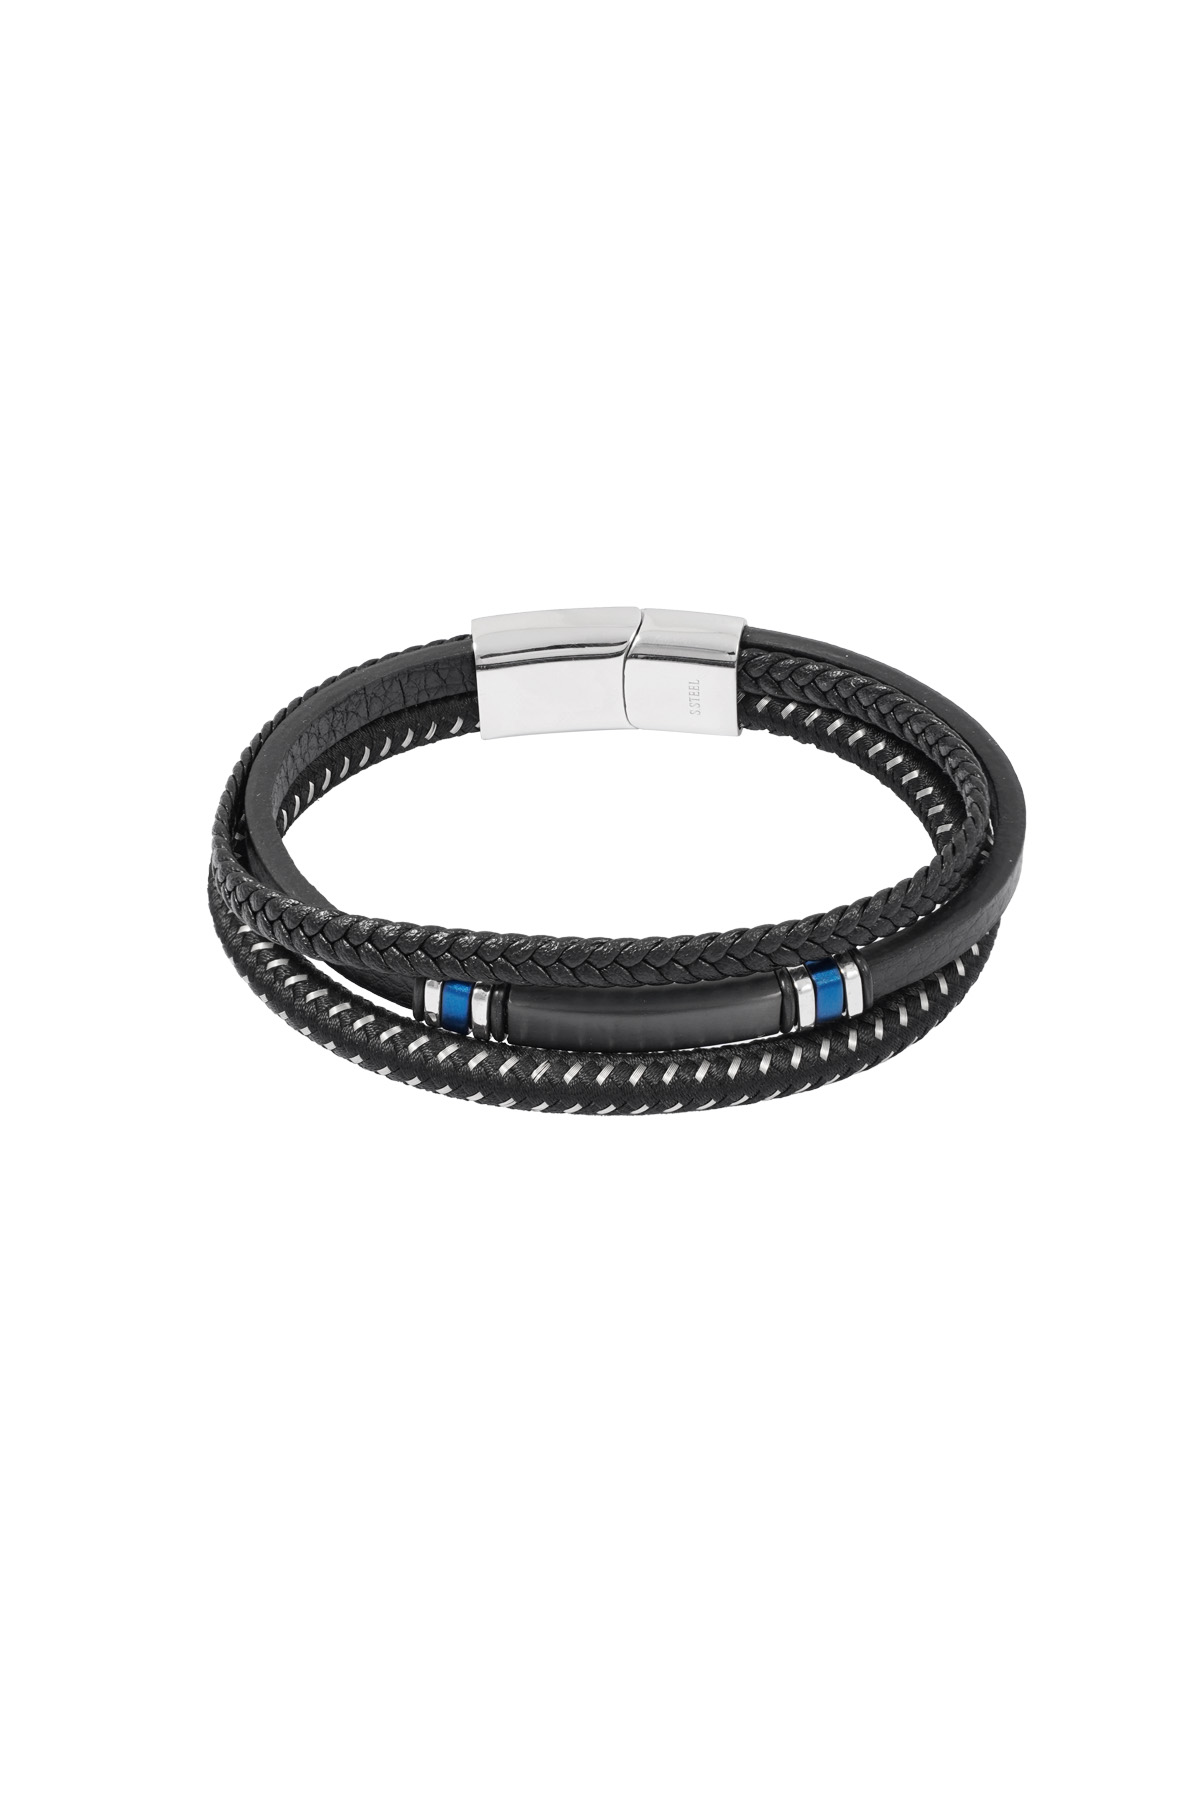 Casual double braided men's bracelet - black/blue 